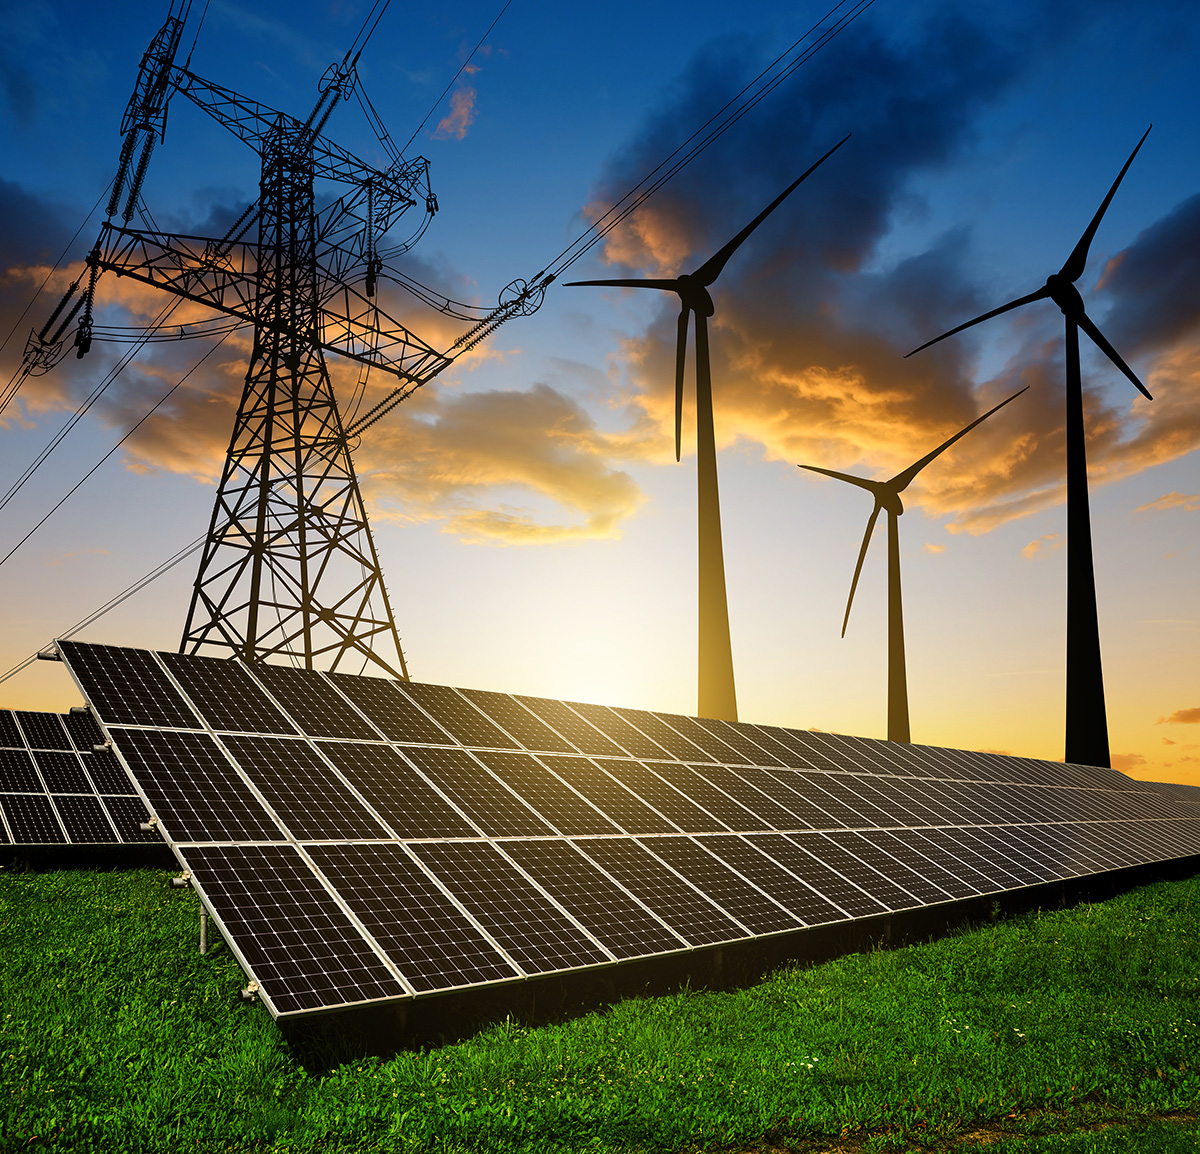 Decarbonizing the Built Environment through Renewable Energy
Auctions